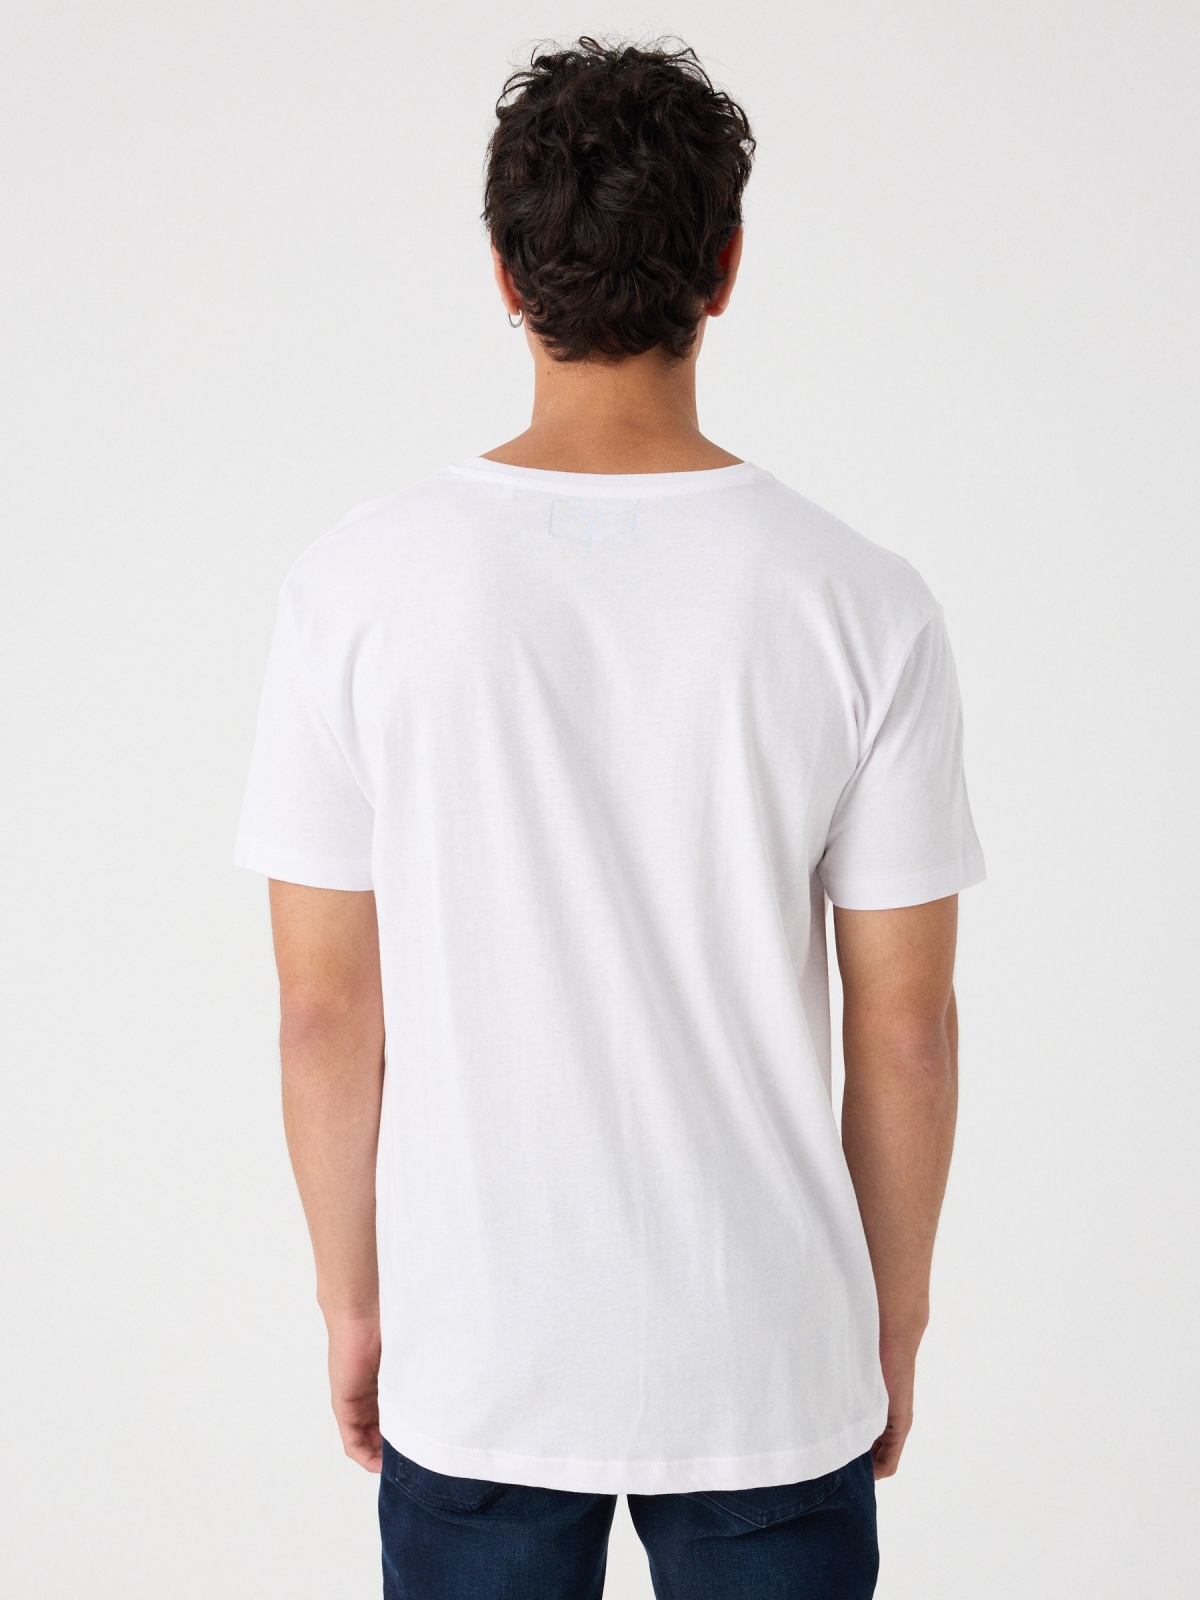 T-shirt caveira pintada branco vista meia traseira